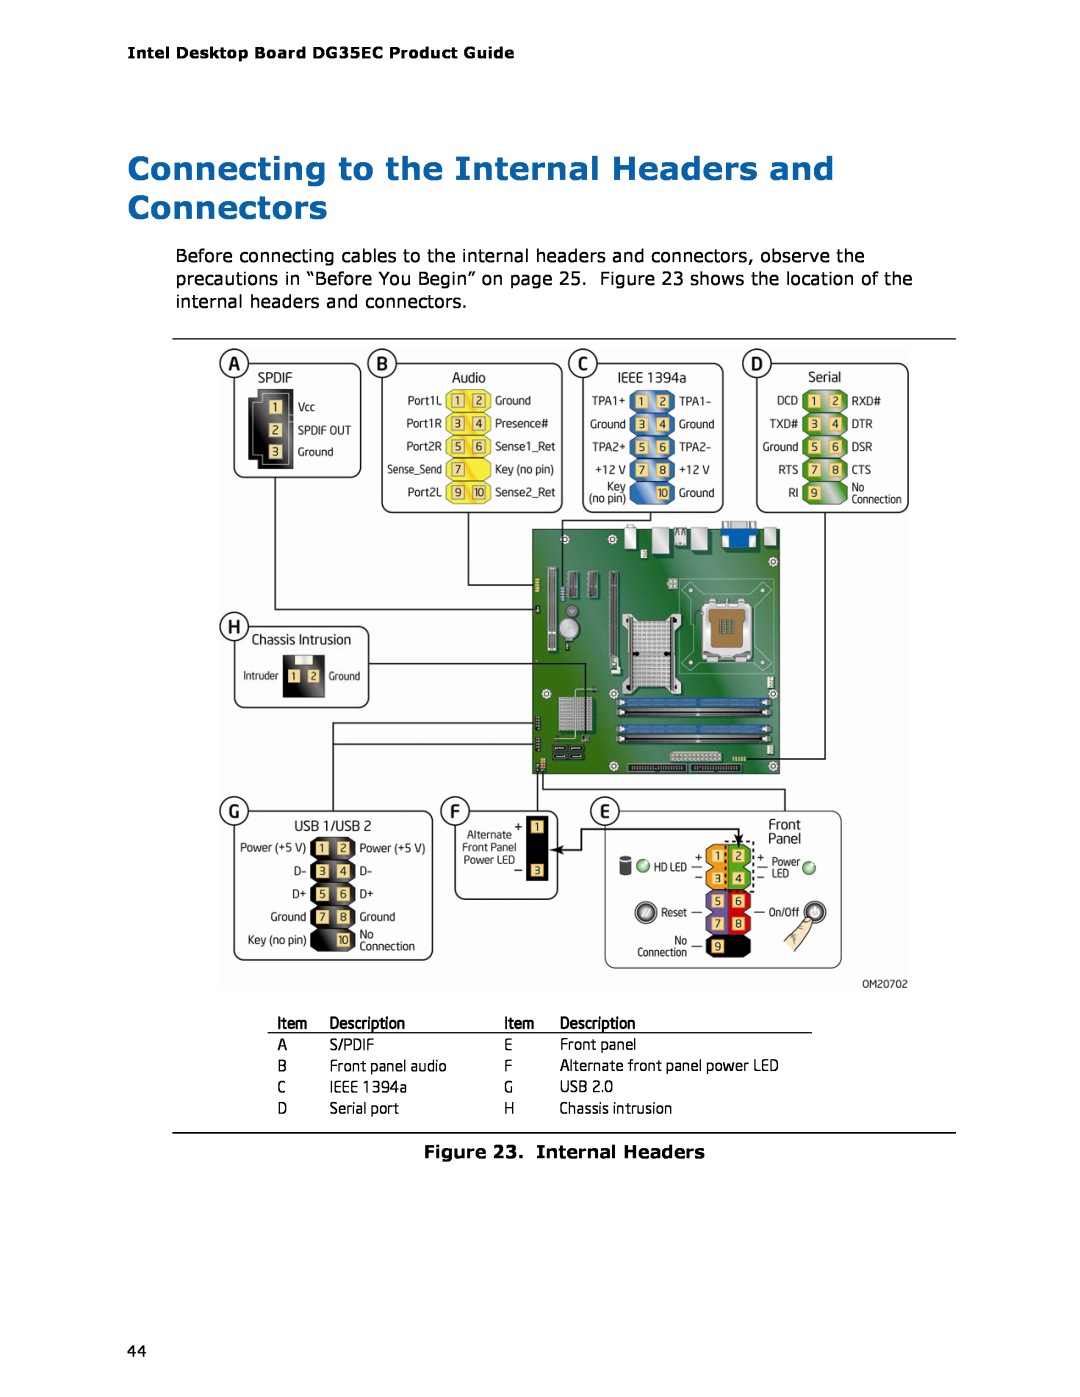 Intel Intel Desktop Board, DG35EC manual Connecting to the Internal Headers and Connectors, Description 